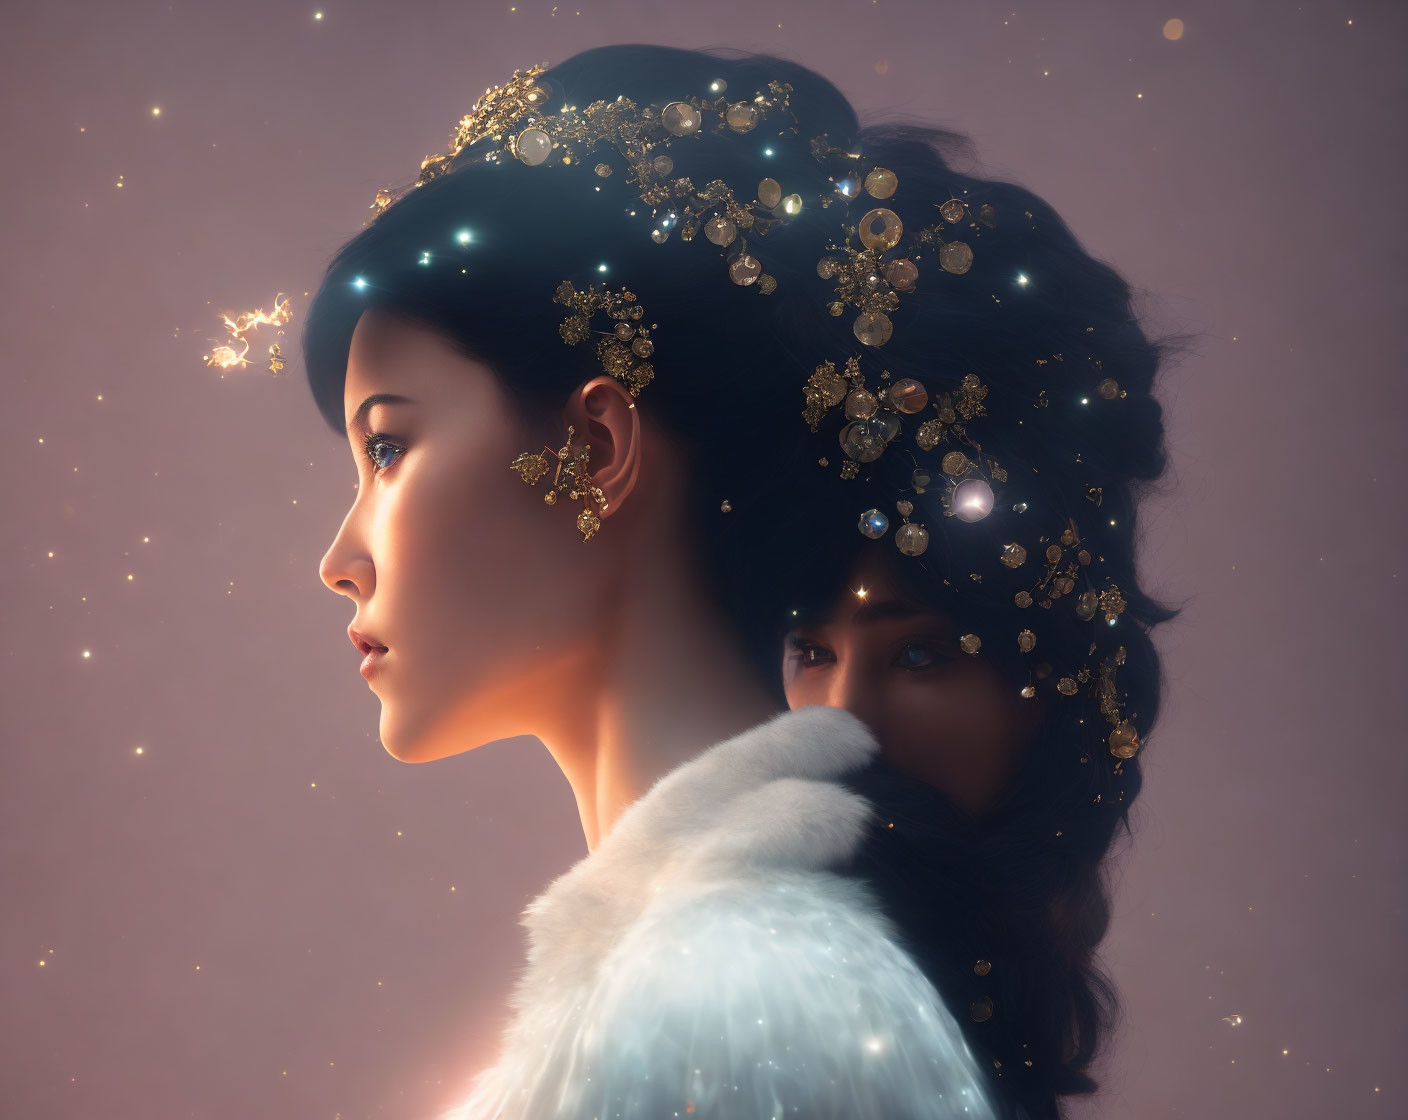 Woman with Dark Hair, Golden Flowers, Stars, White Fur Collar, Cosmic Background